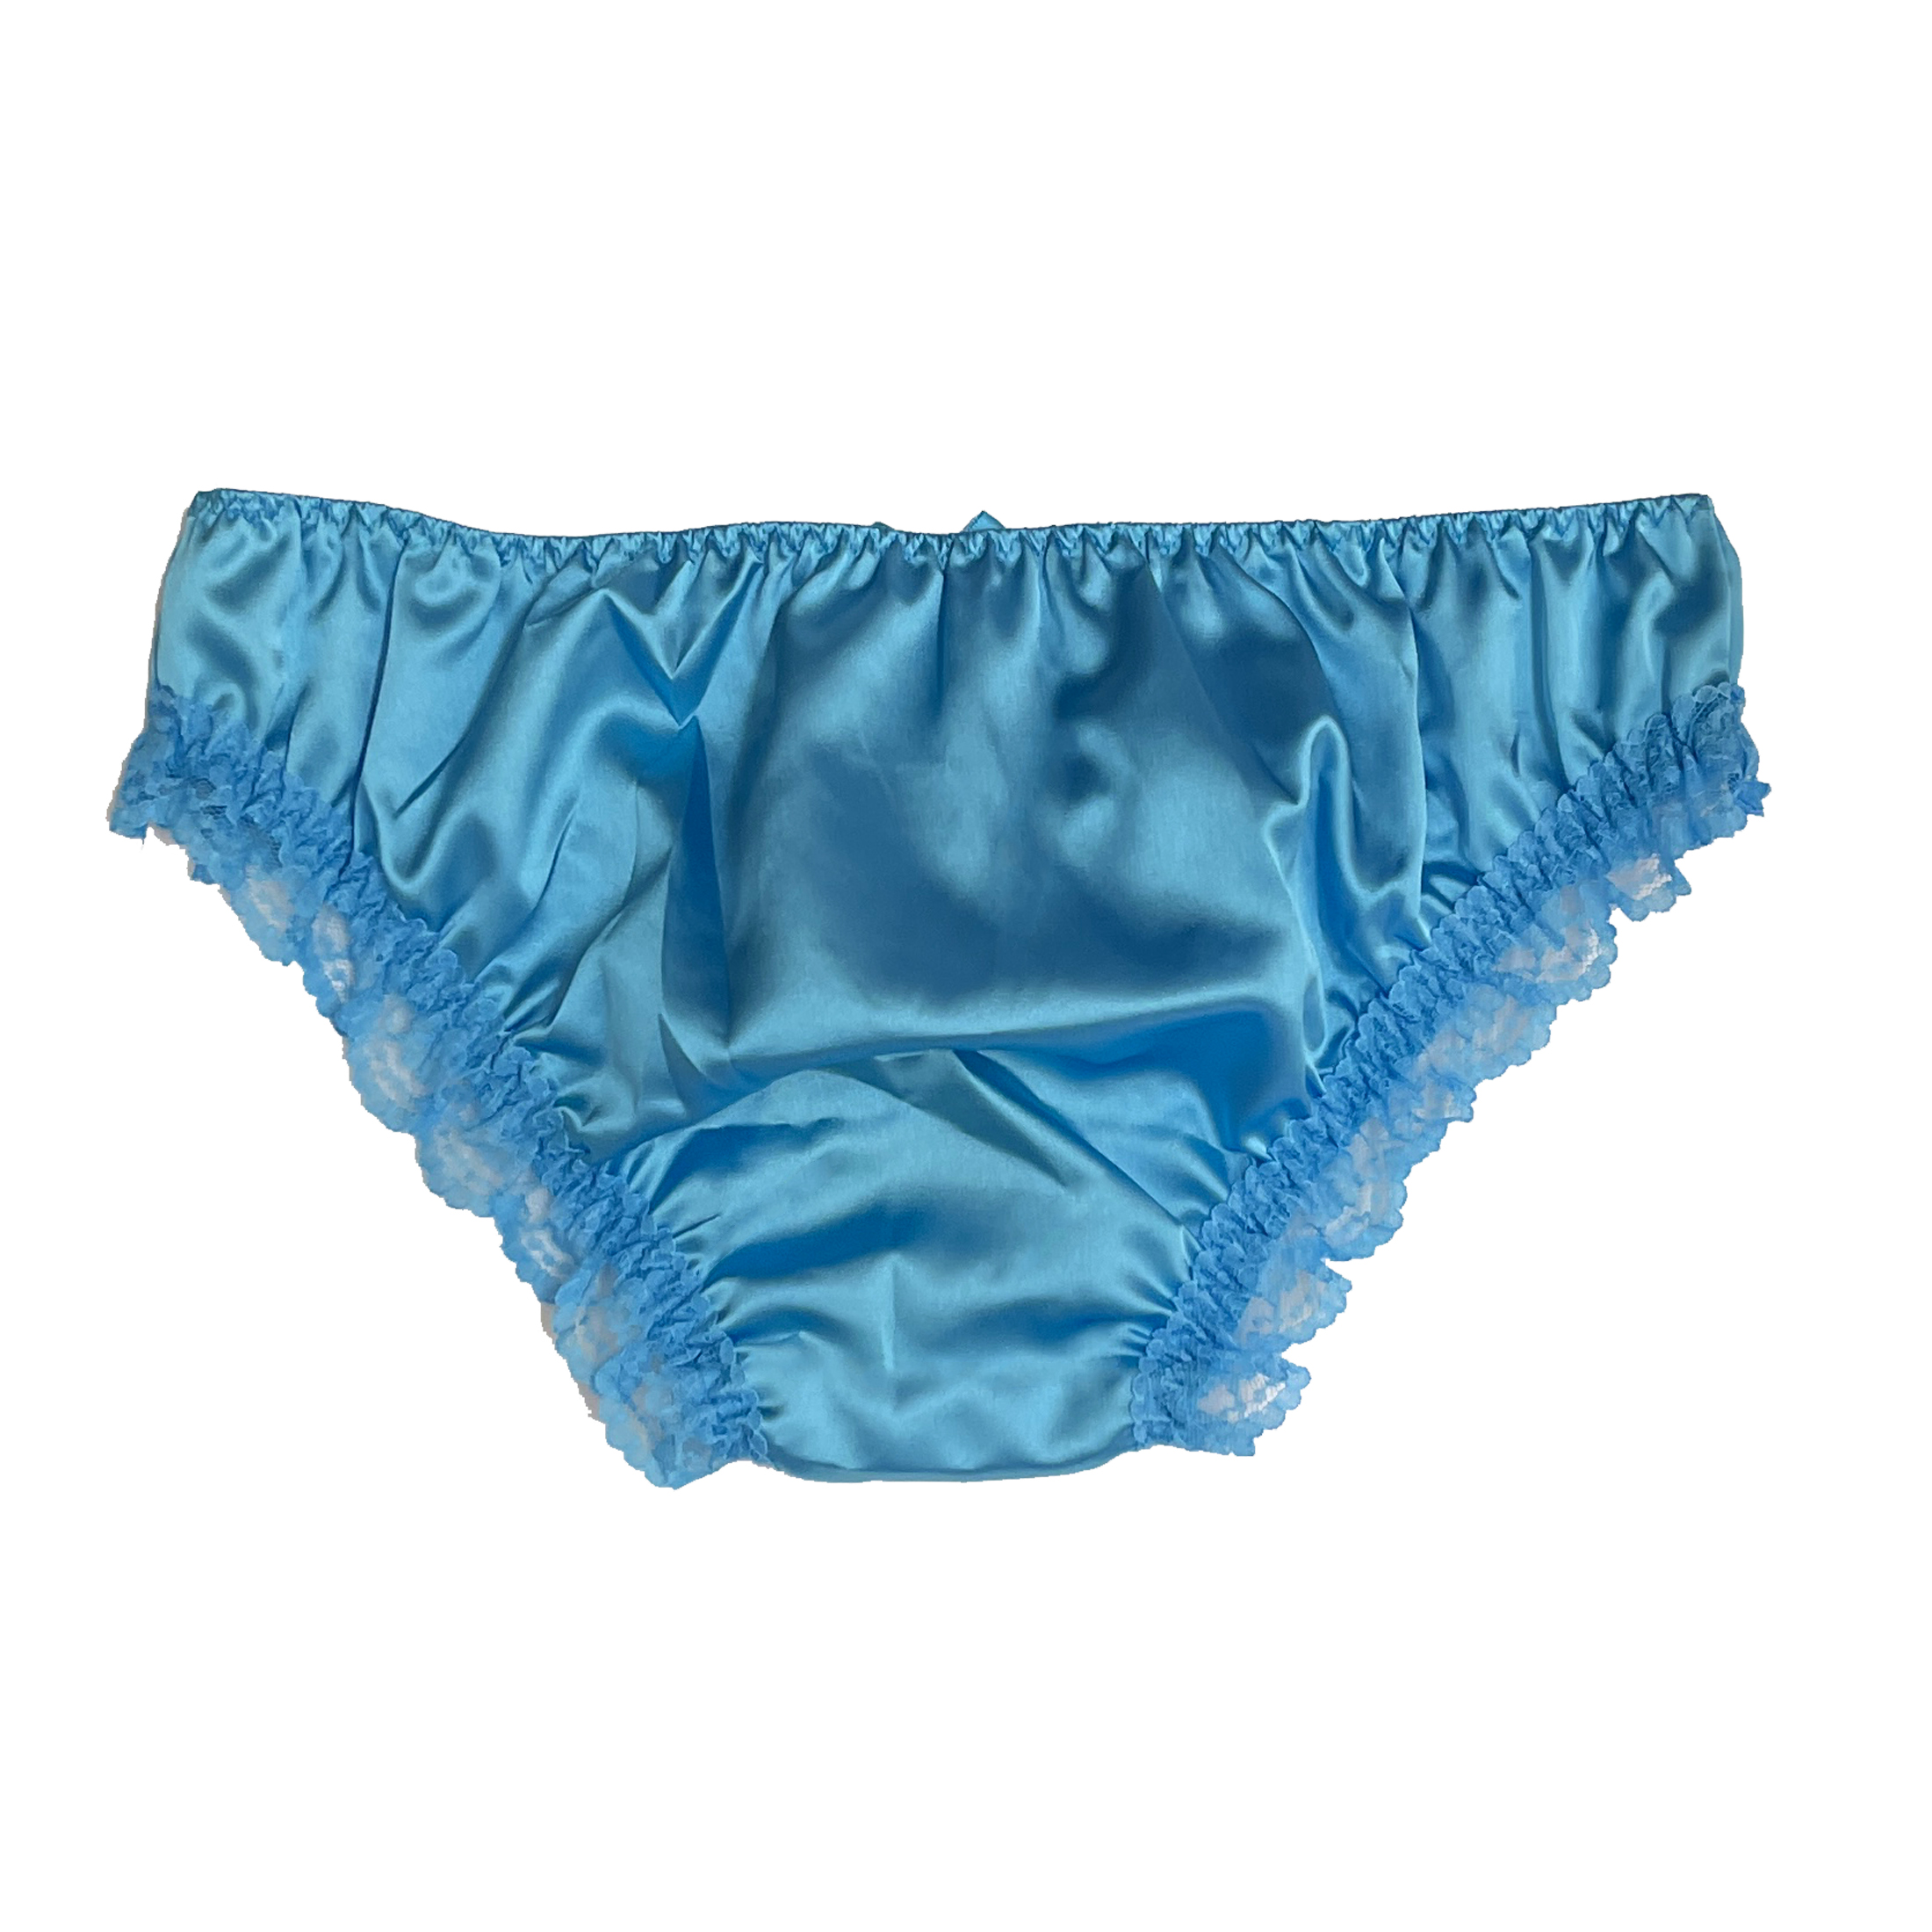 Satin Lace Frilly Sissy Cdtv Full Panties Knicker Briefs Underwear Size S Xxl Ebay 9349